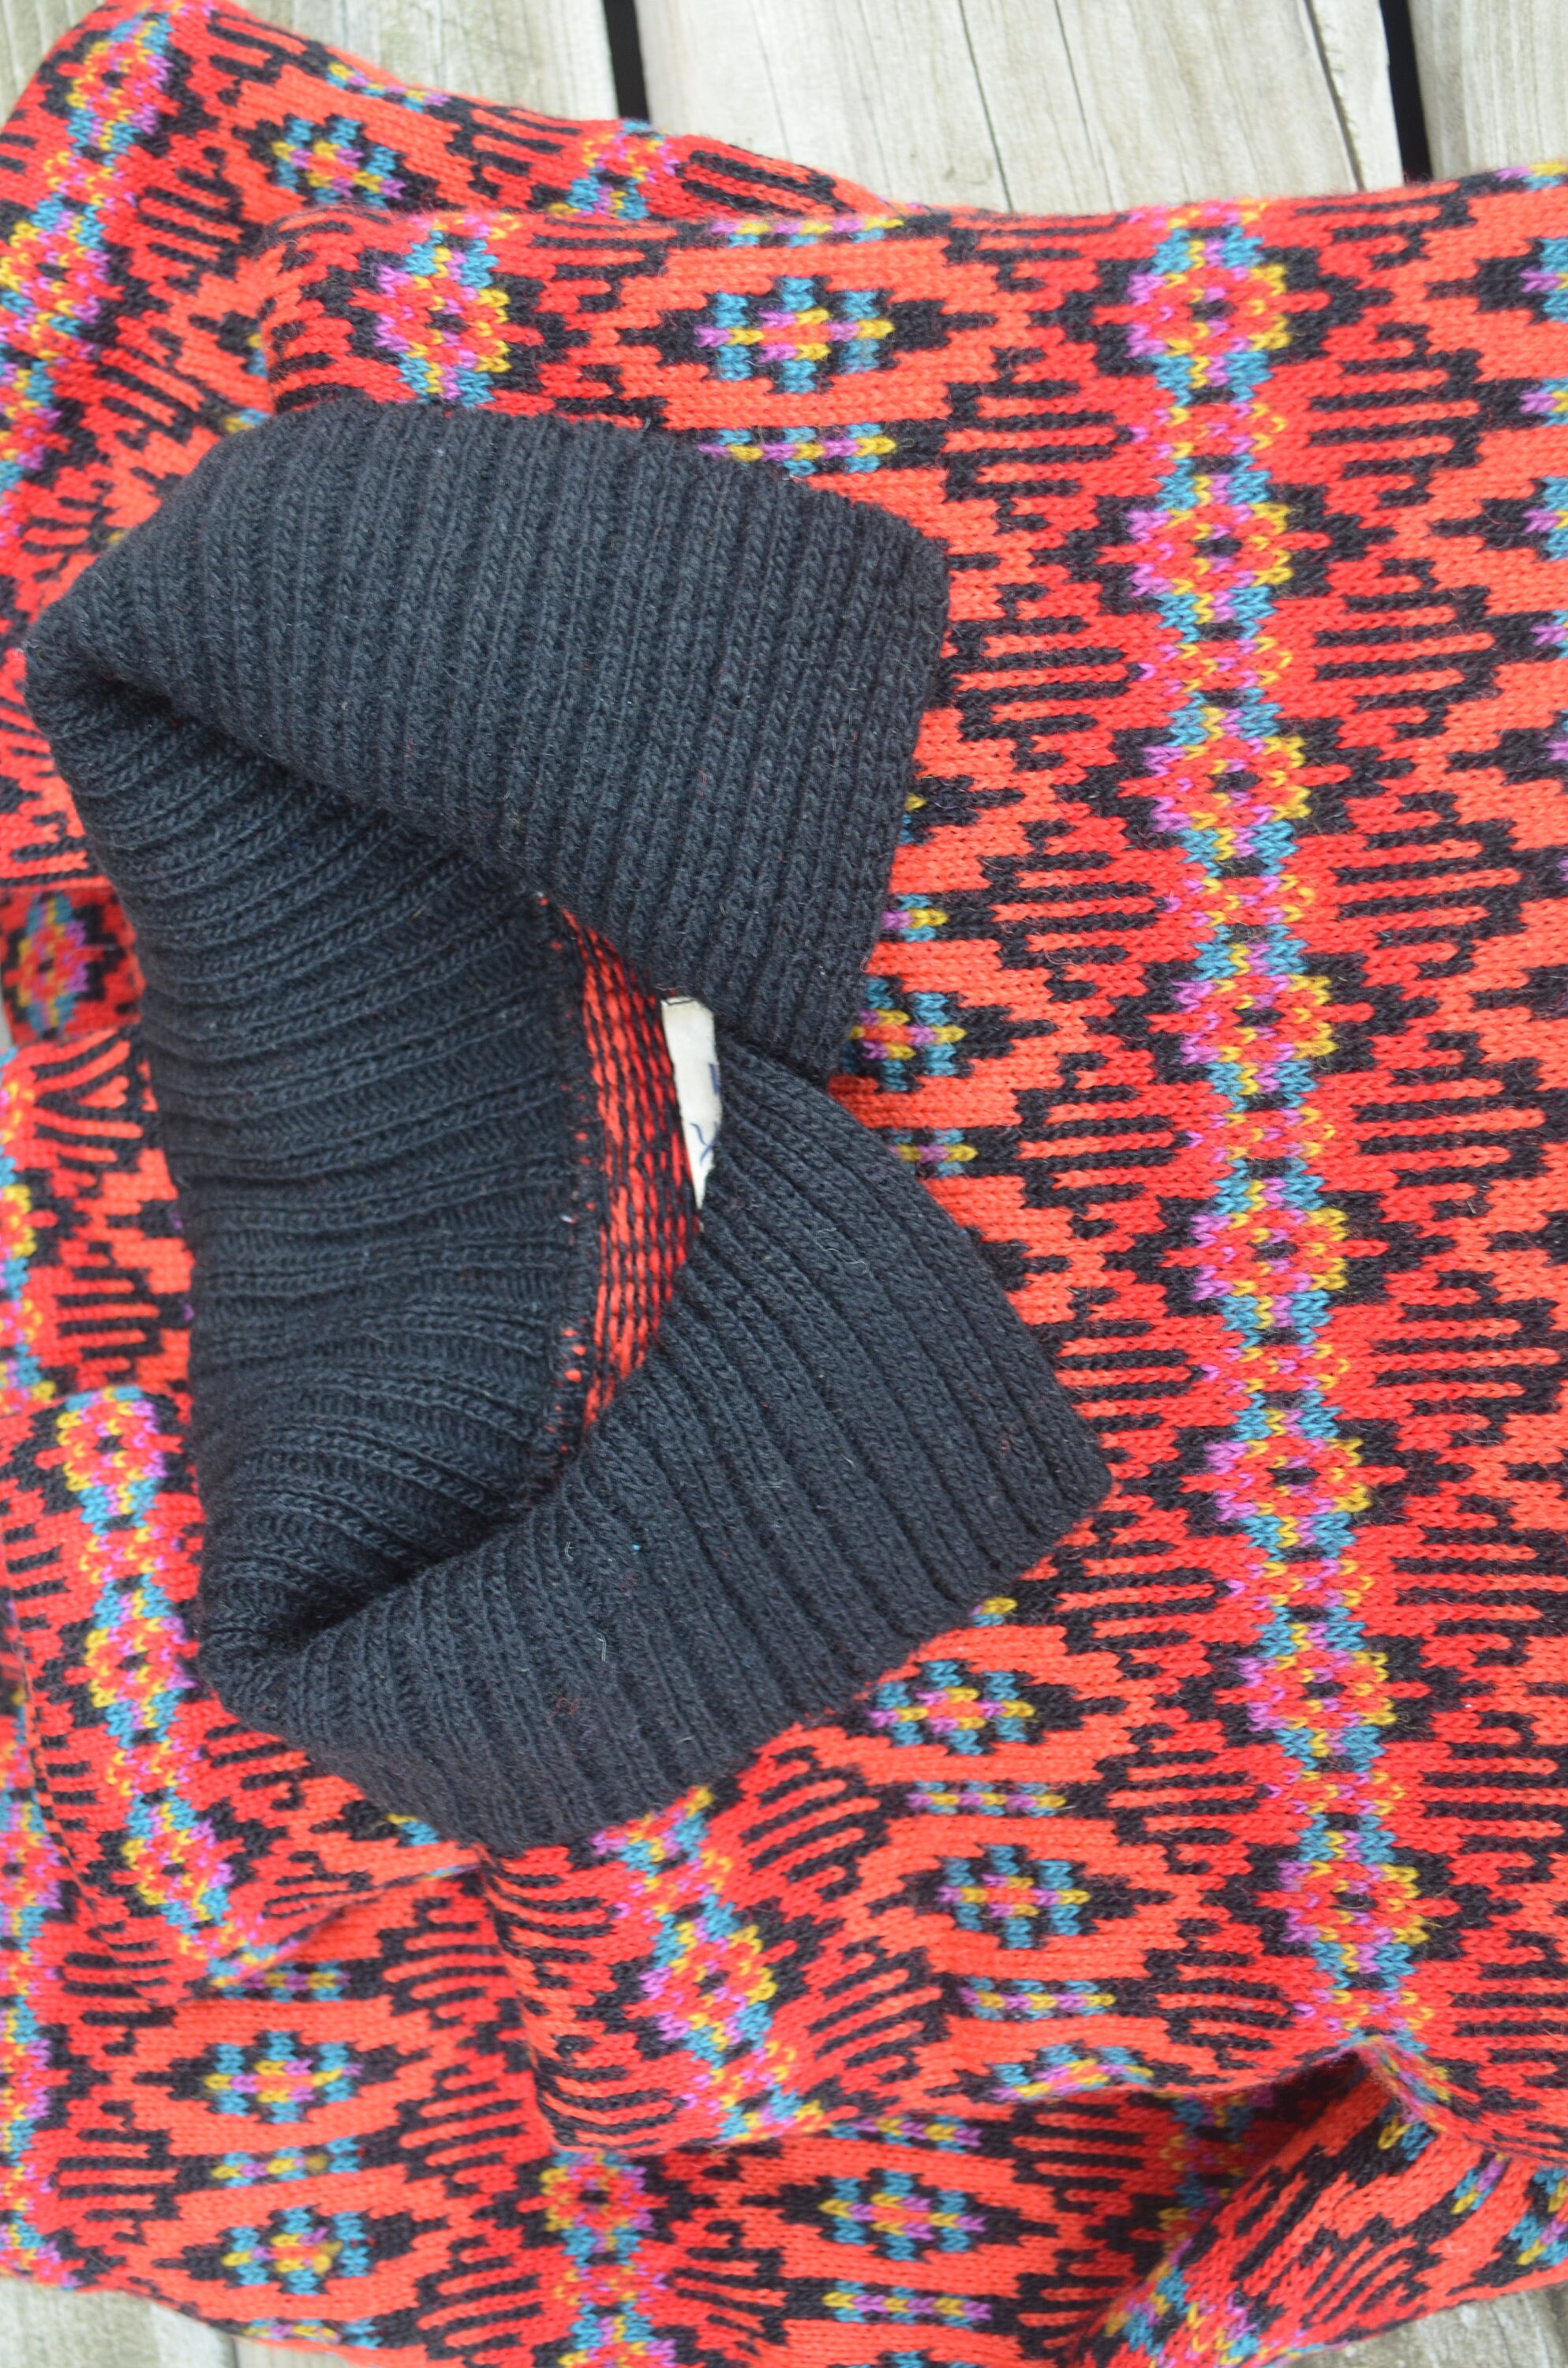 Figgjo Norwegian wool sweater pretty colorful Made in | Etsy